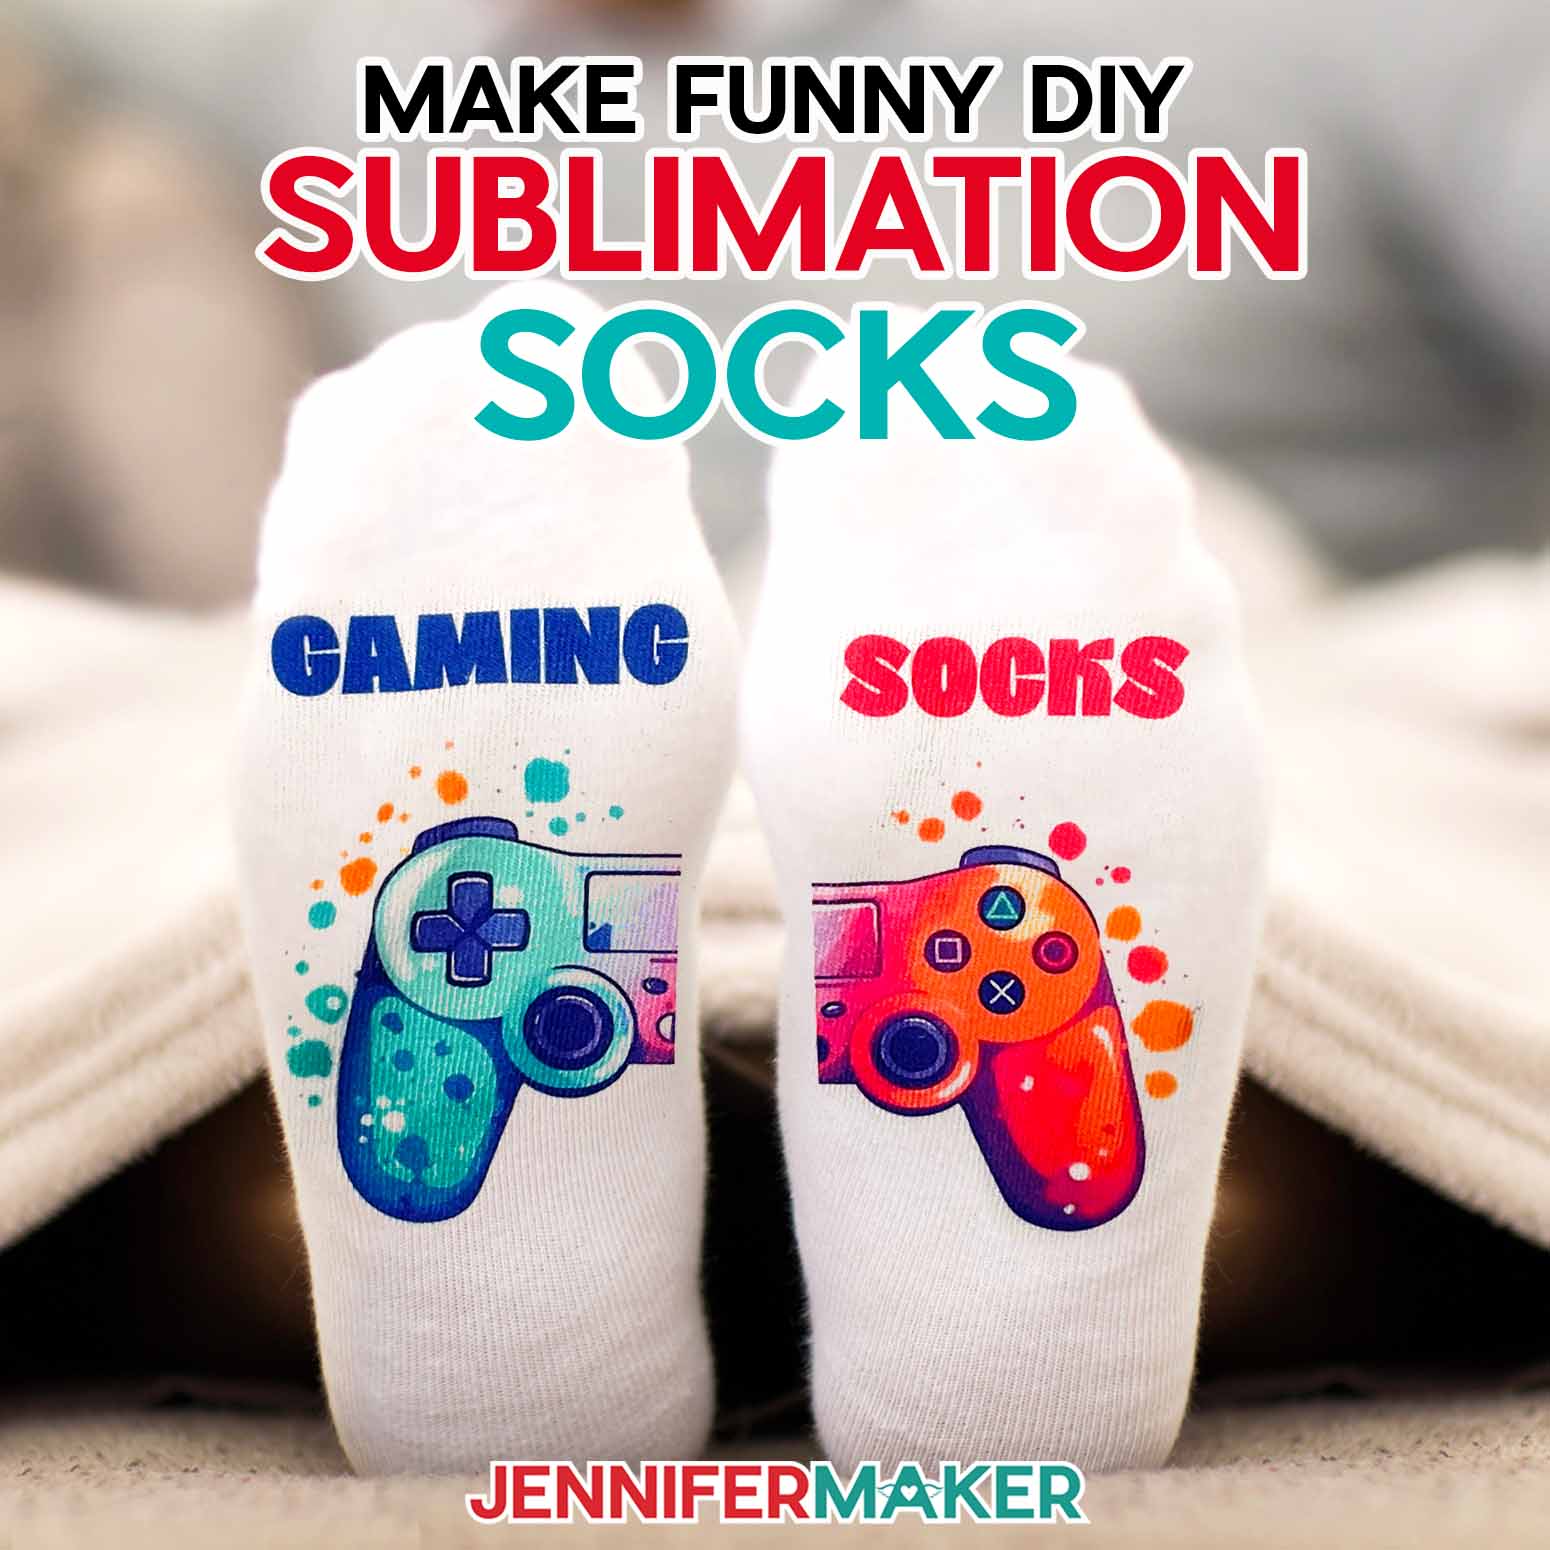 DIY funny socks by JenniferMaker.